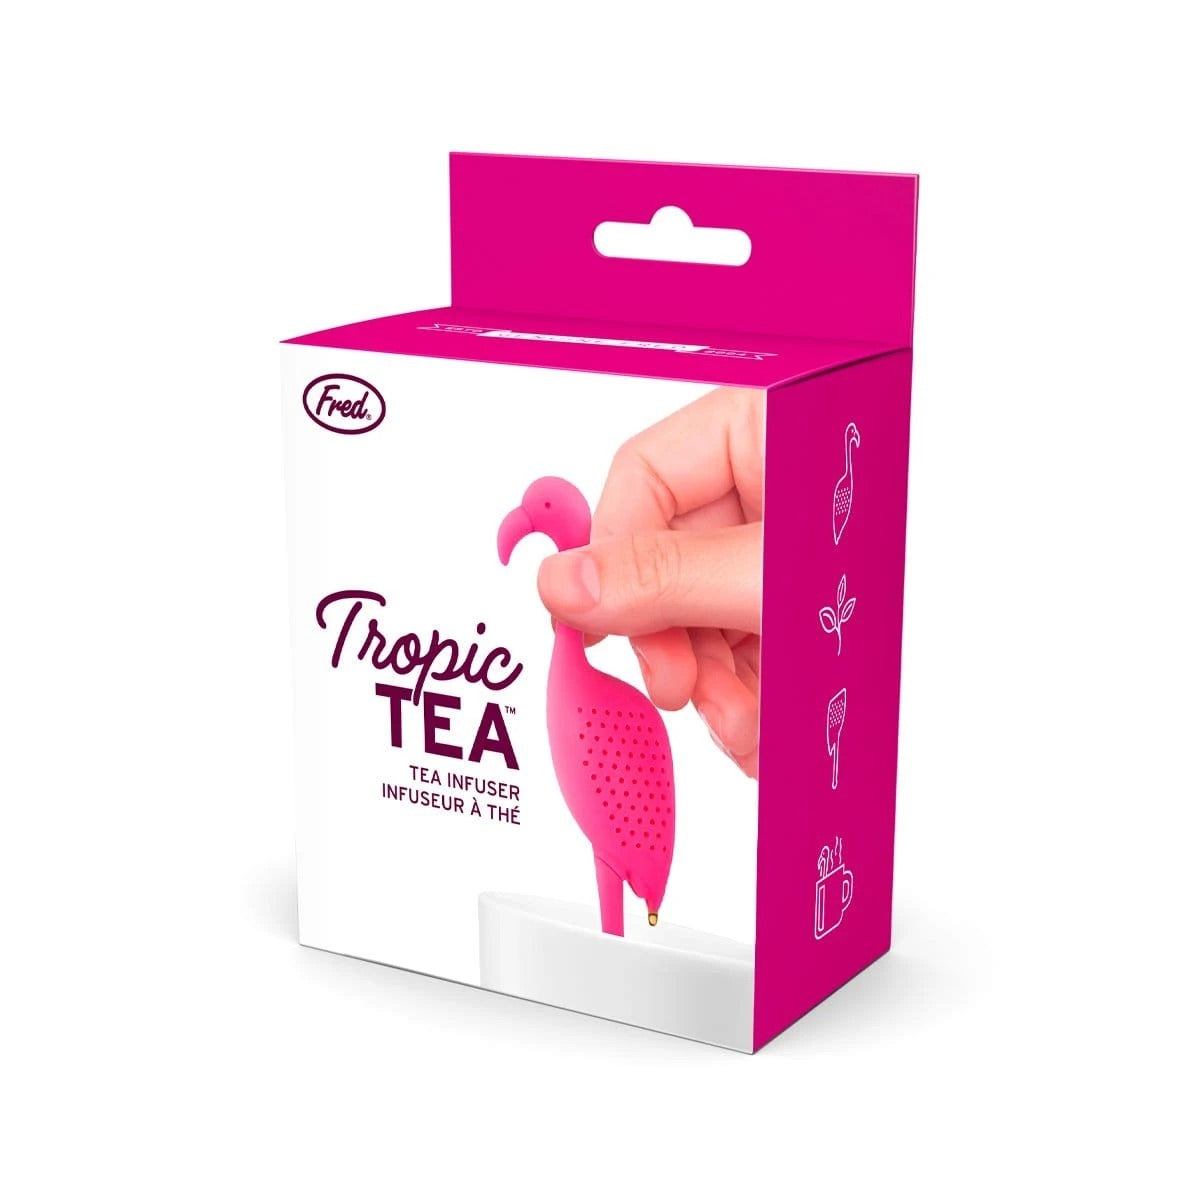 Fred Tropic Tea Infuser